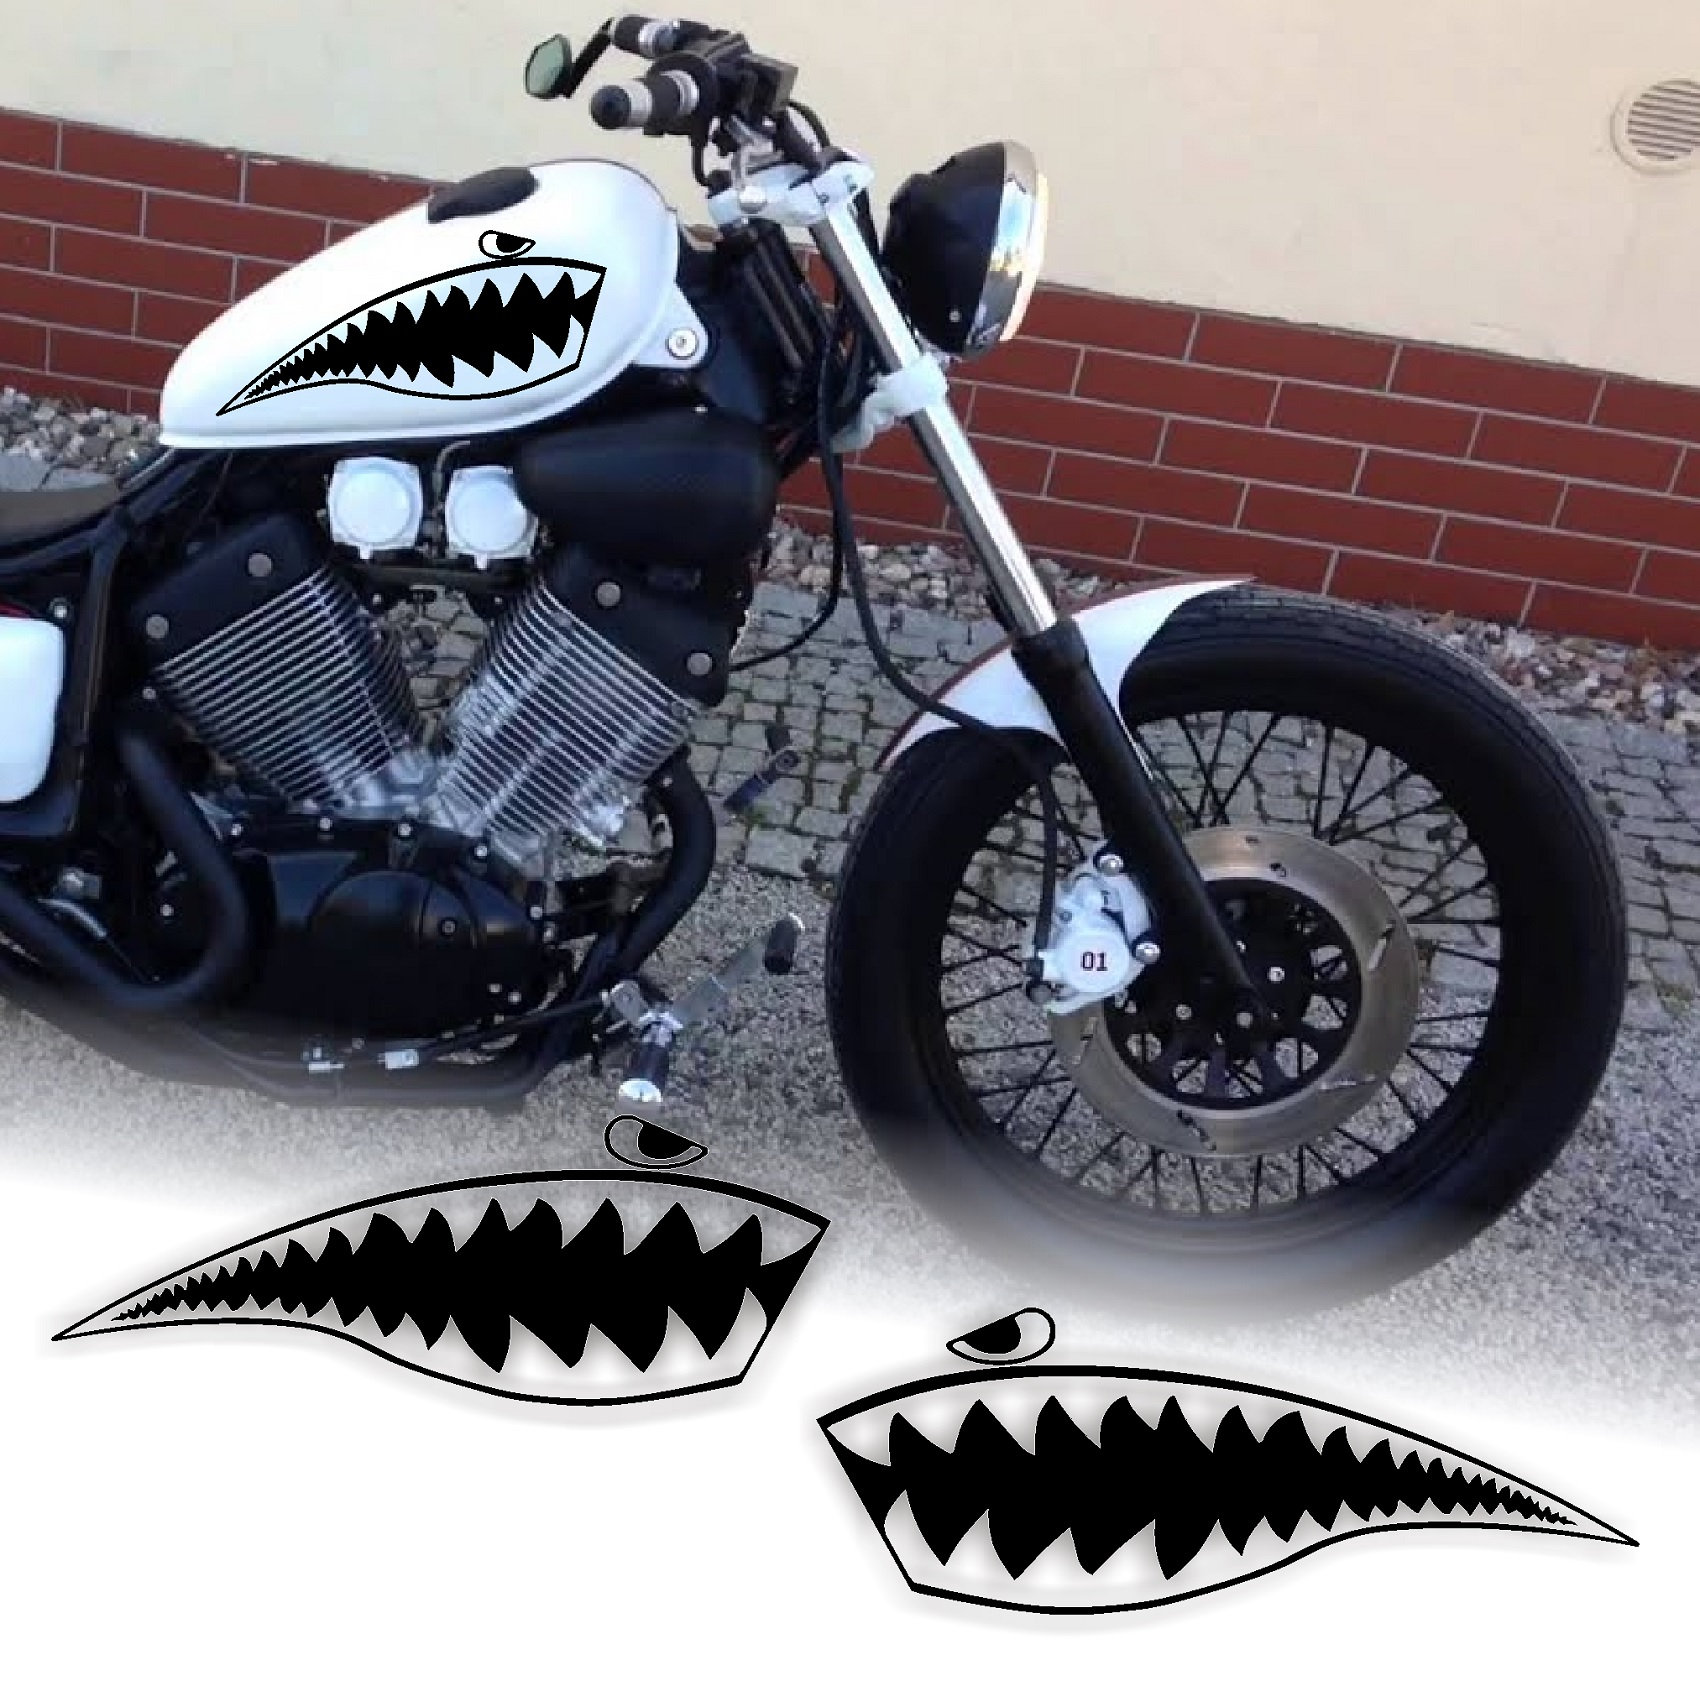 custom biker tuner motorrad bobber sticker stamp' Men's Hoodie